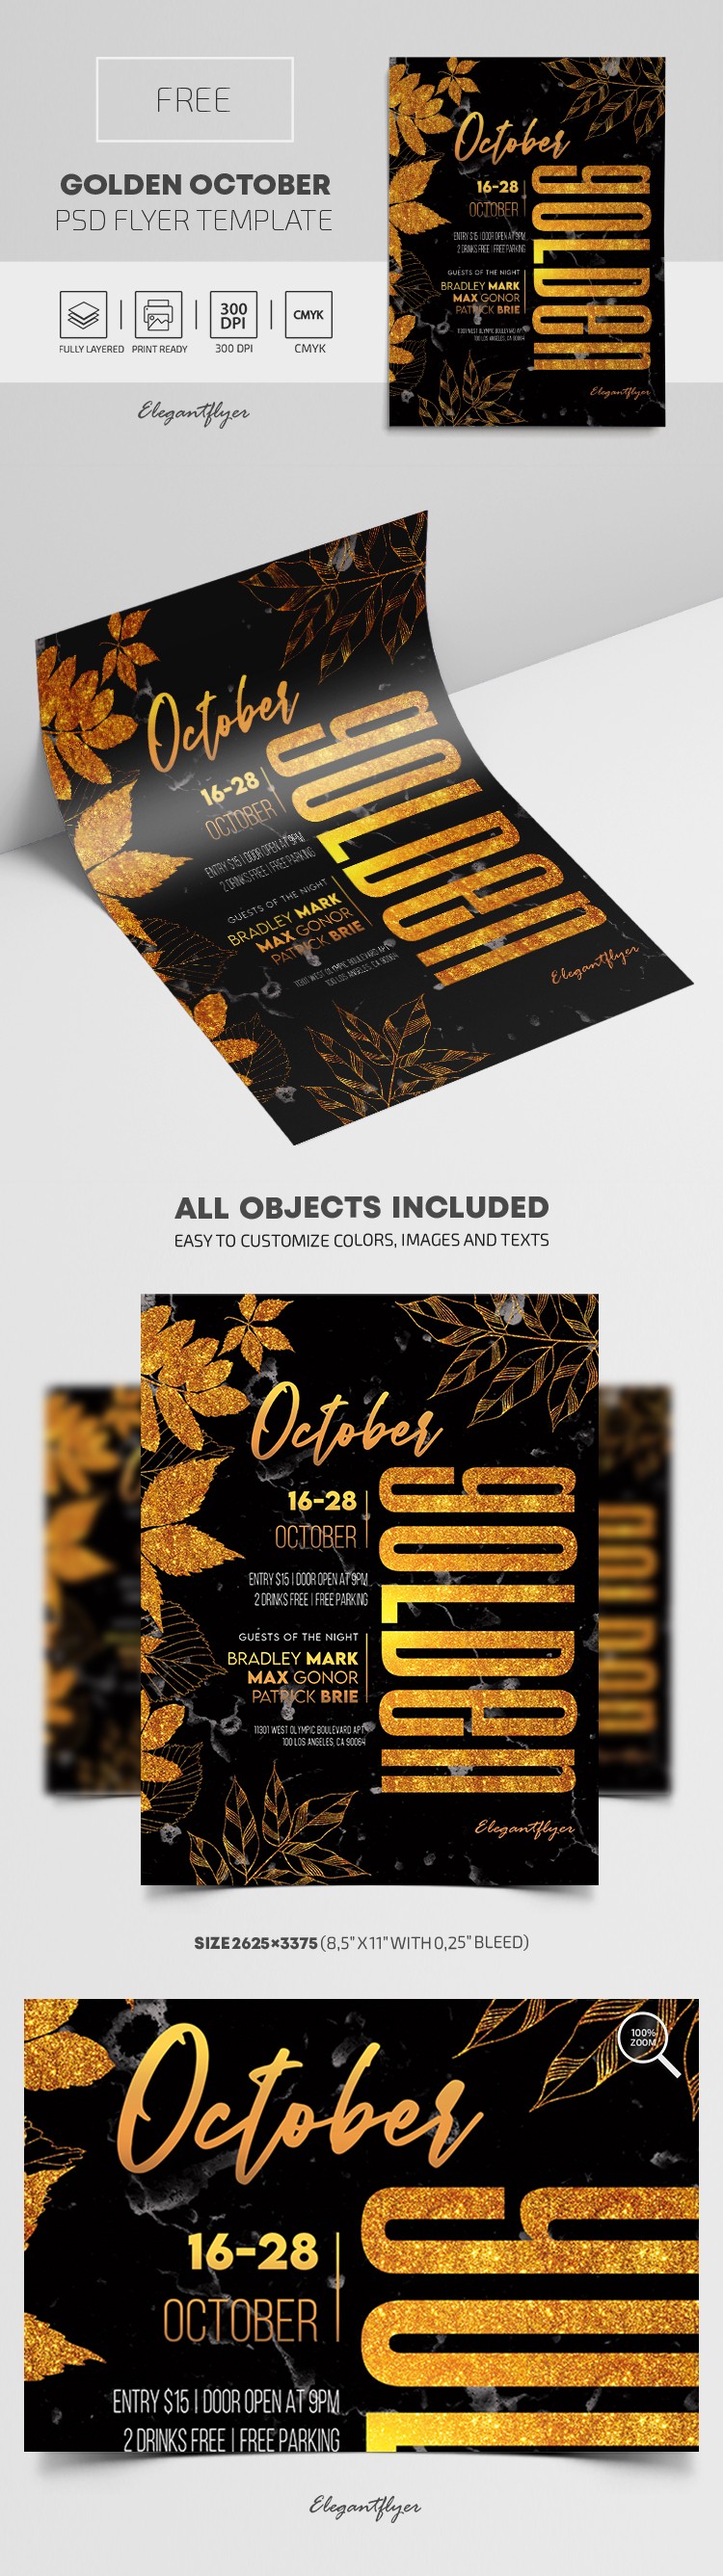 Golden October Flyer by ElegantFlyer